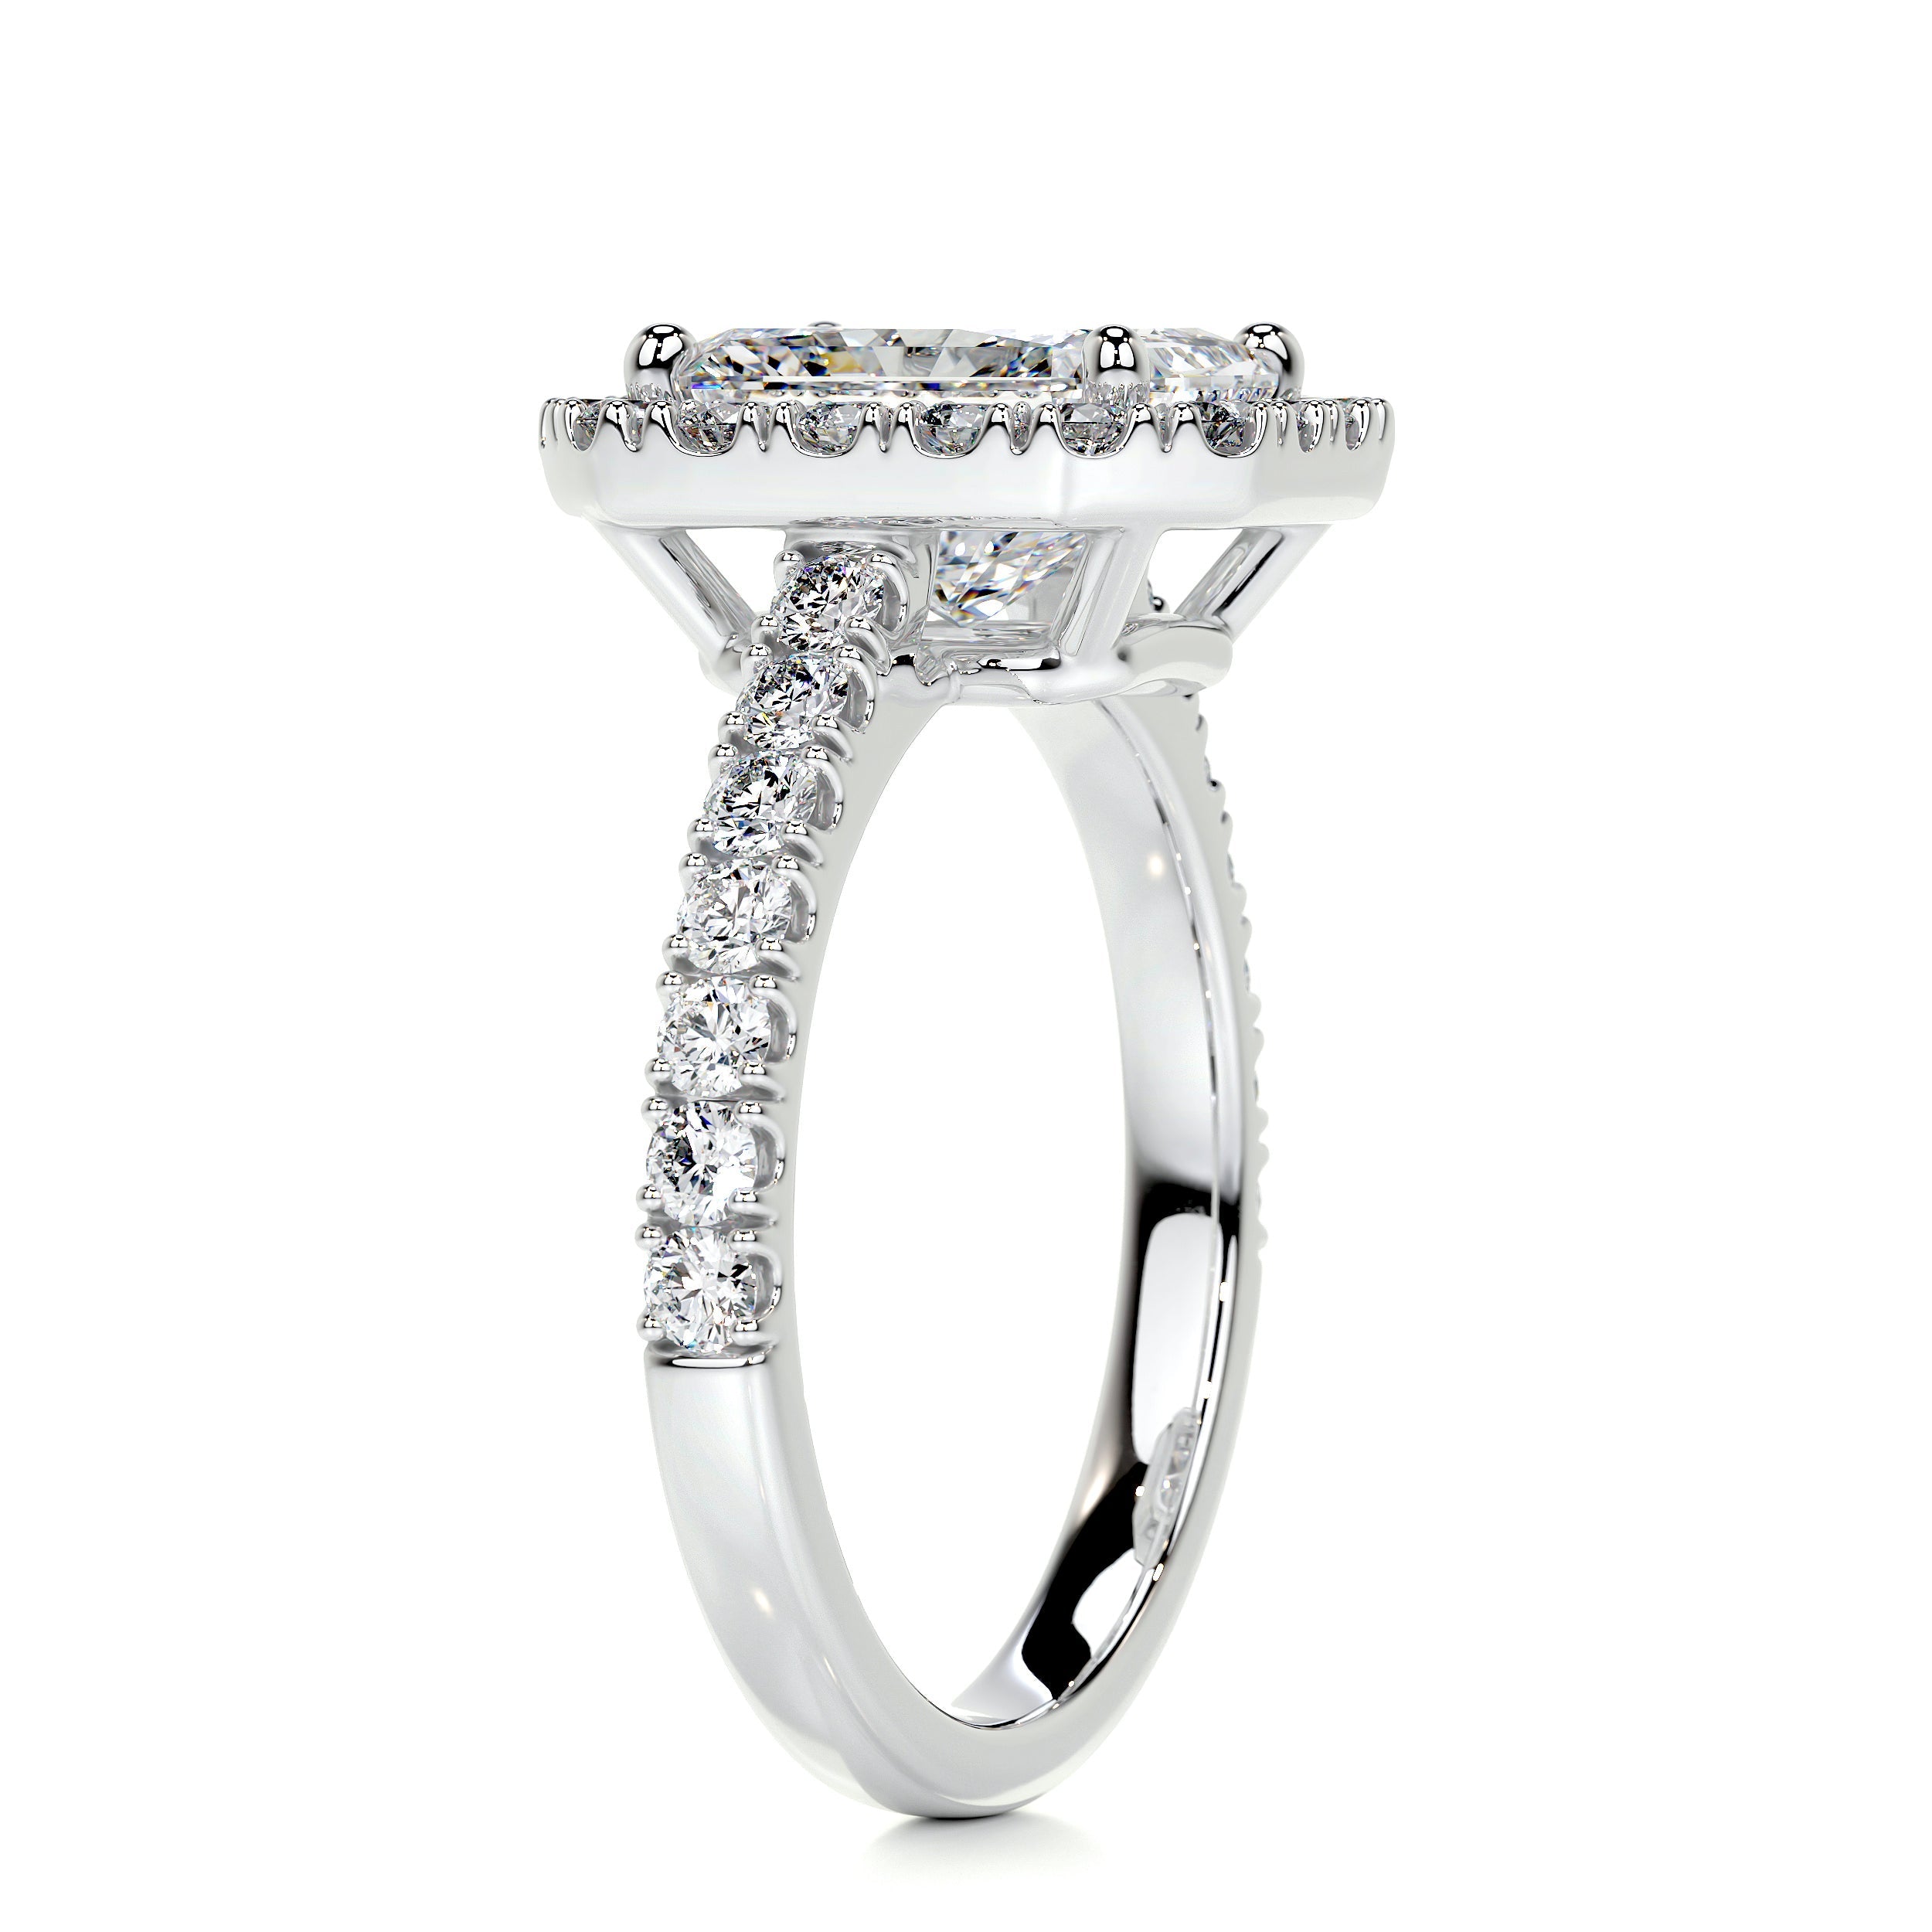 Andrea Diamond Engagement Ring   (2.5 Carat) -18K White Gold (RTS)